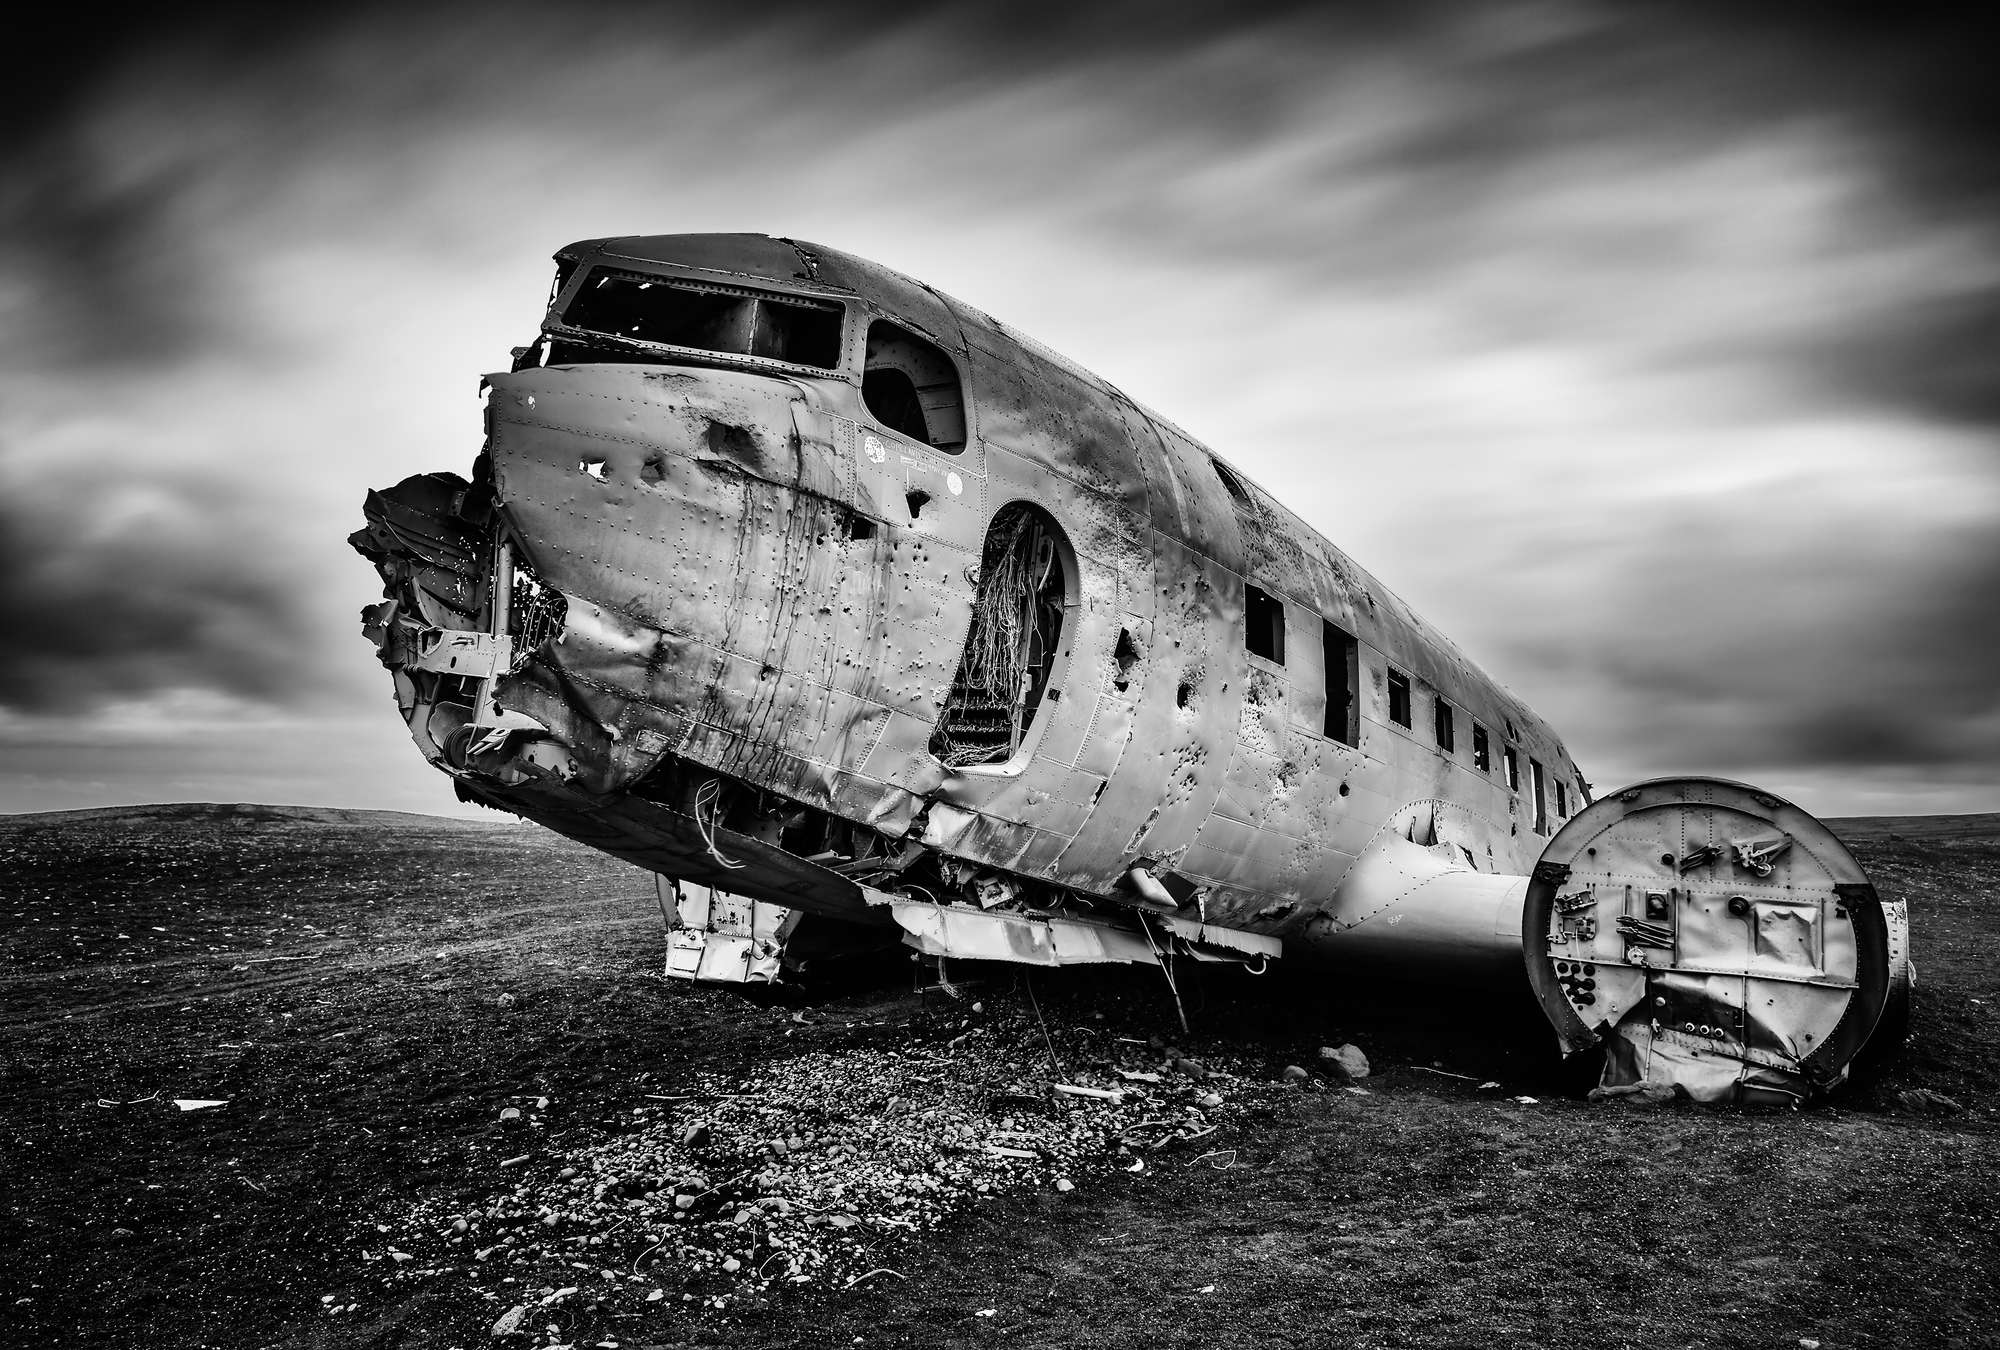             Photo wallpaper plane wreck - black and white
        